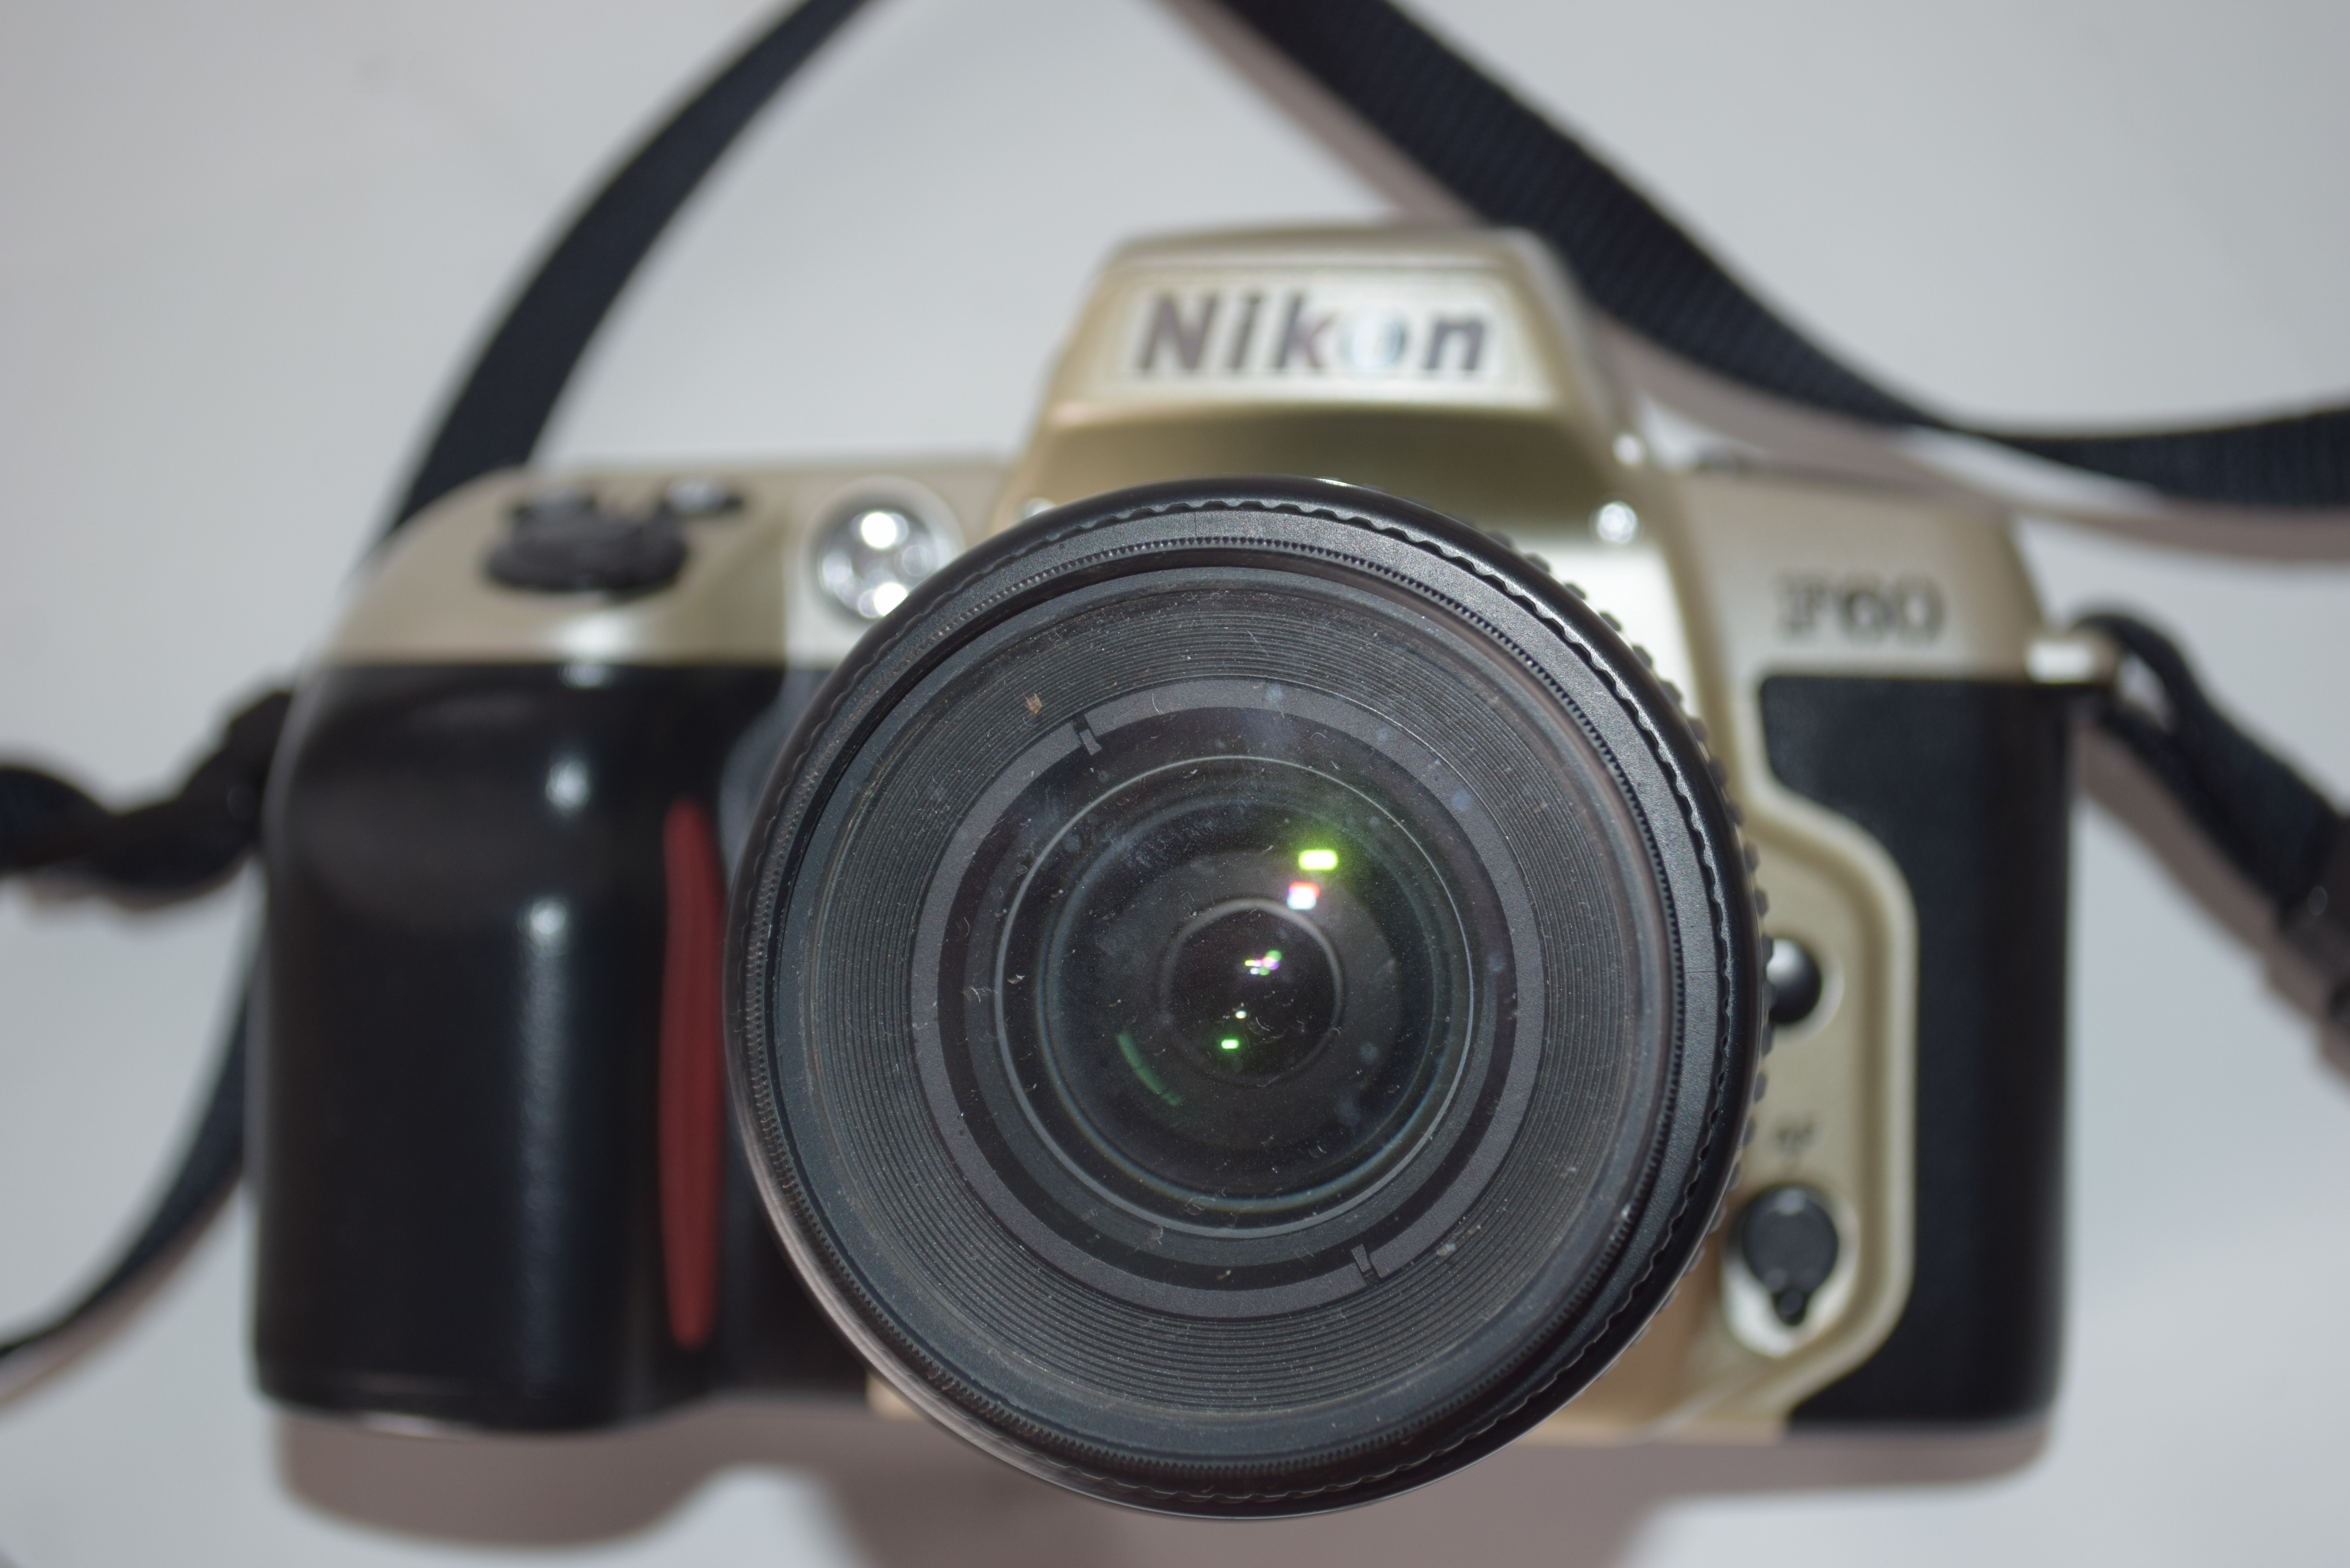 Nikon F60 film camera with film loaded, together with a Nikon AF Nikkor 35-80mm lens, manual and - Image 2 of 5